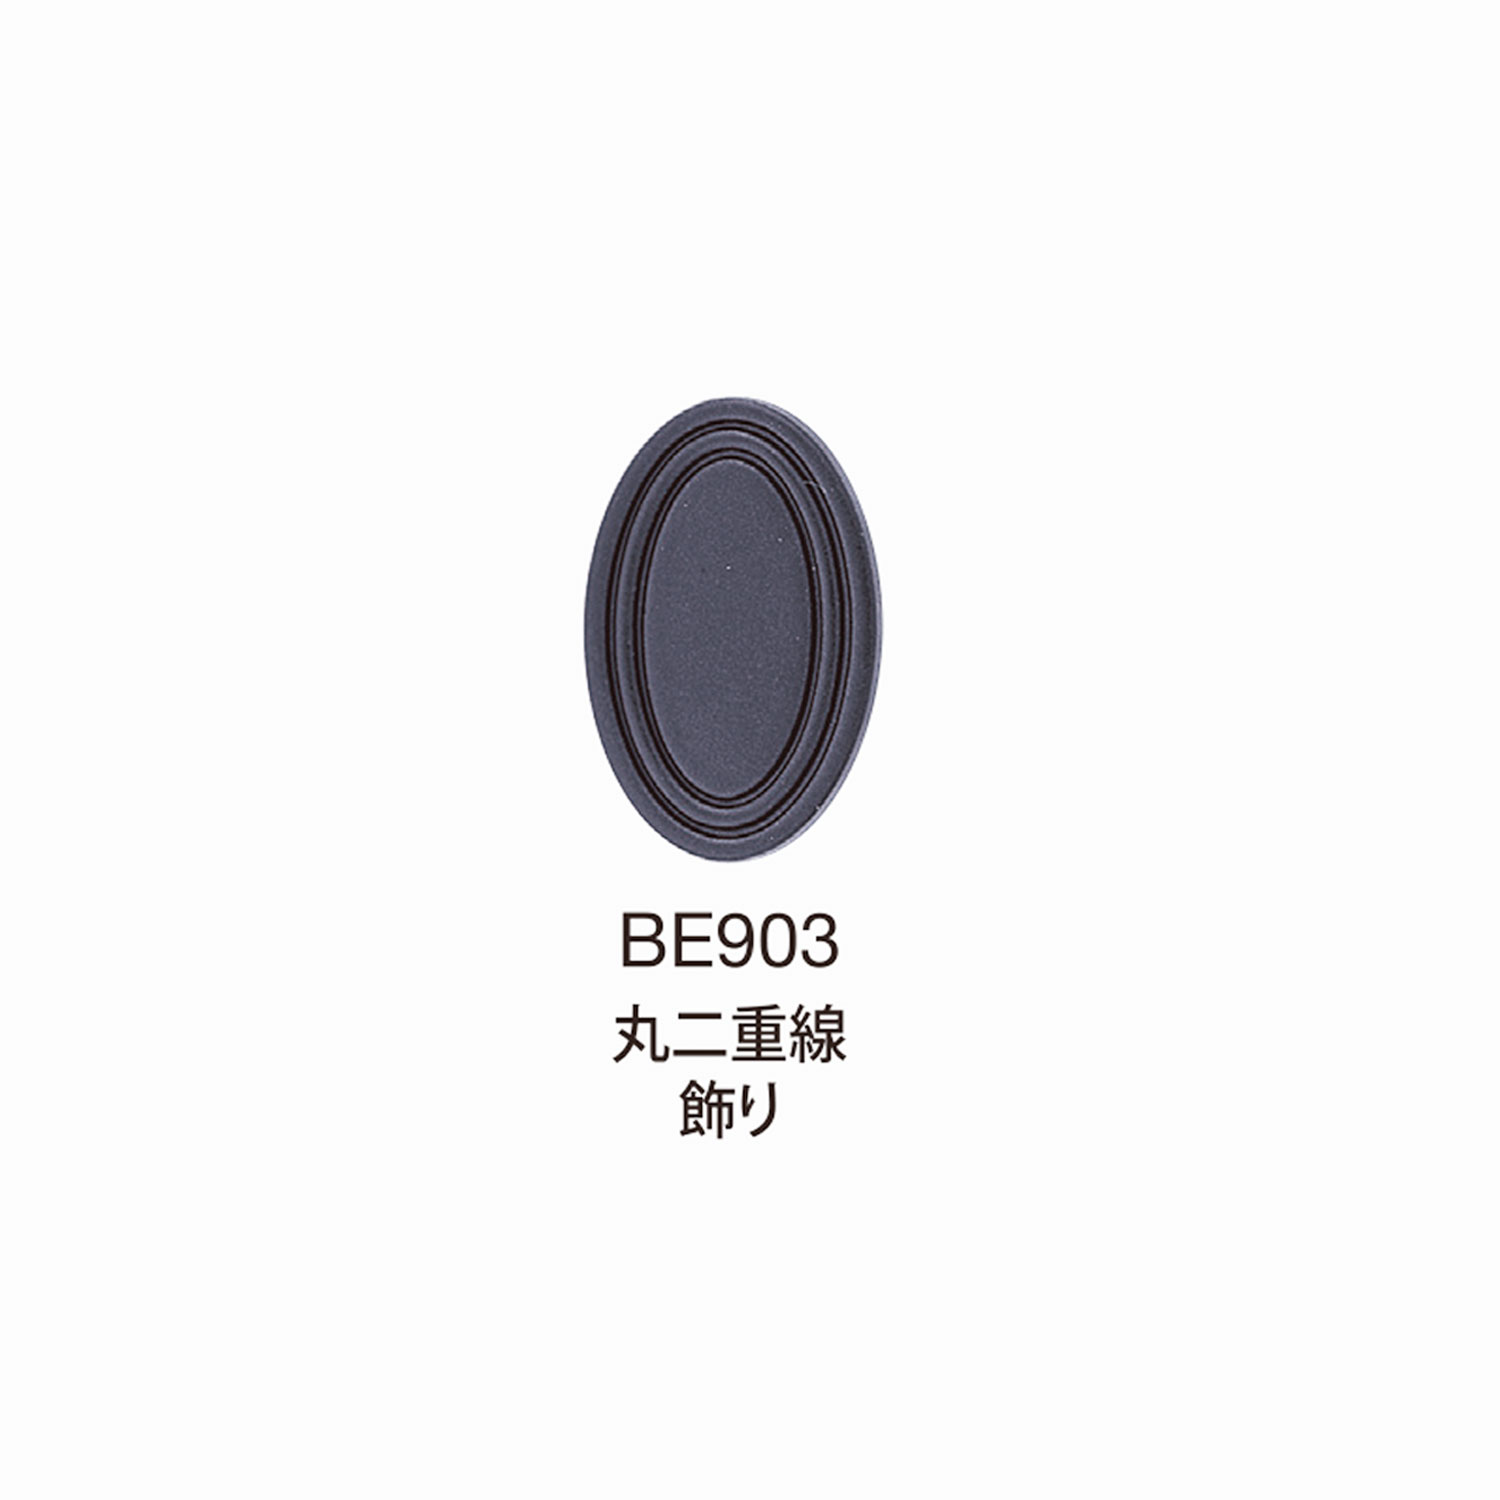 BE903 BEREX α Top Hardware 圆形双线装饰[扣和环] Morito（MORITO）